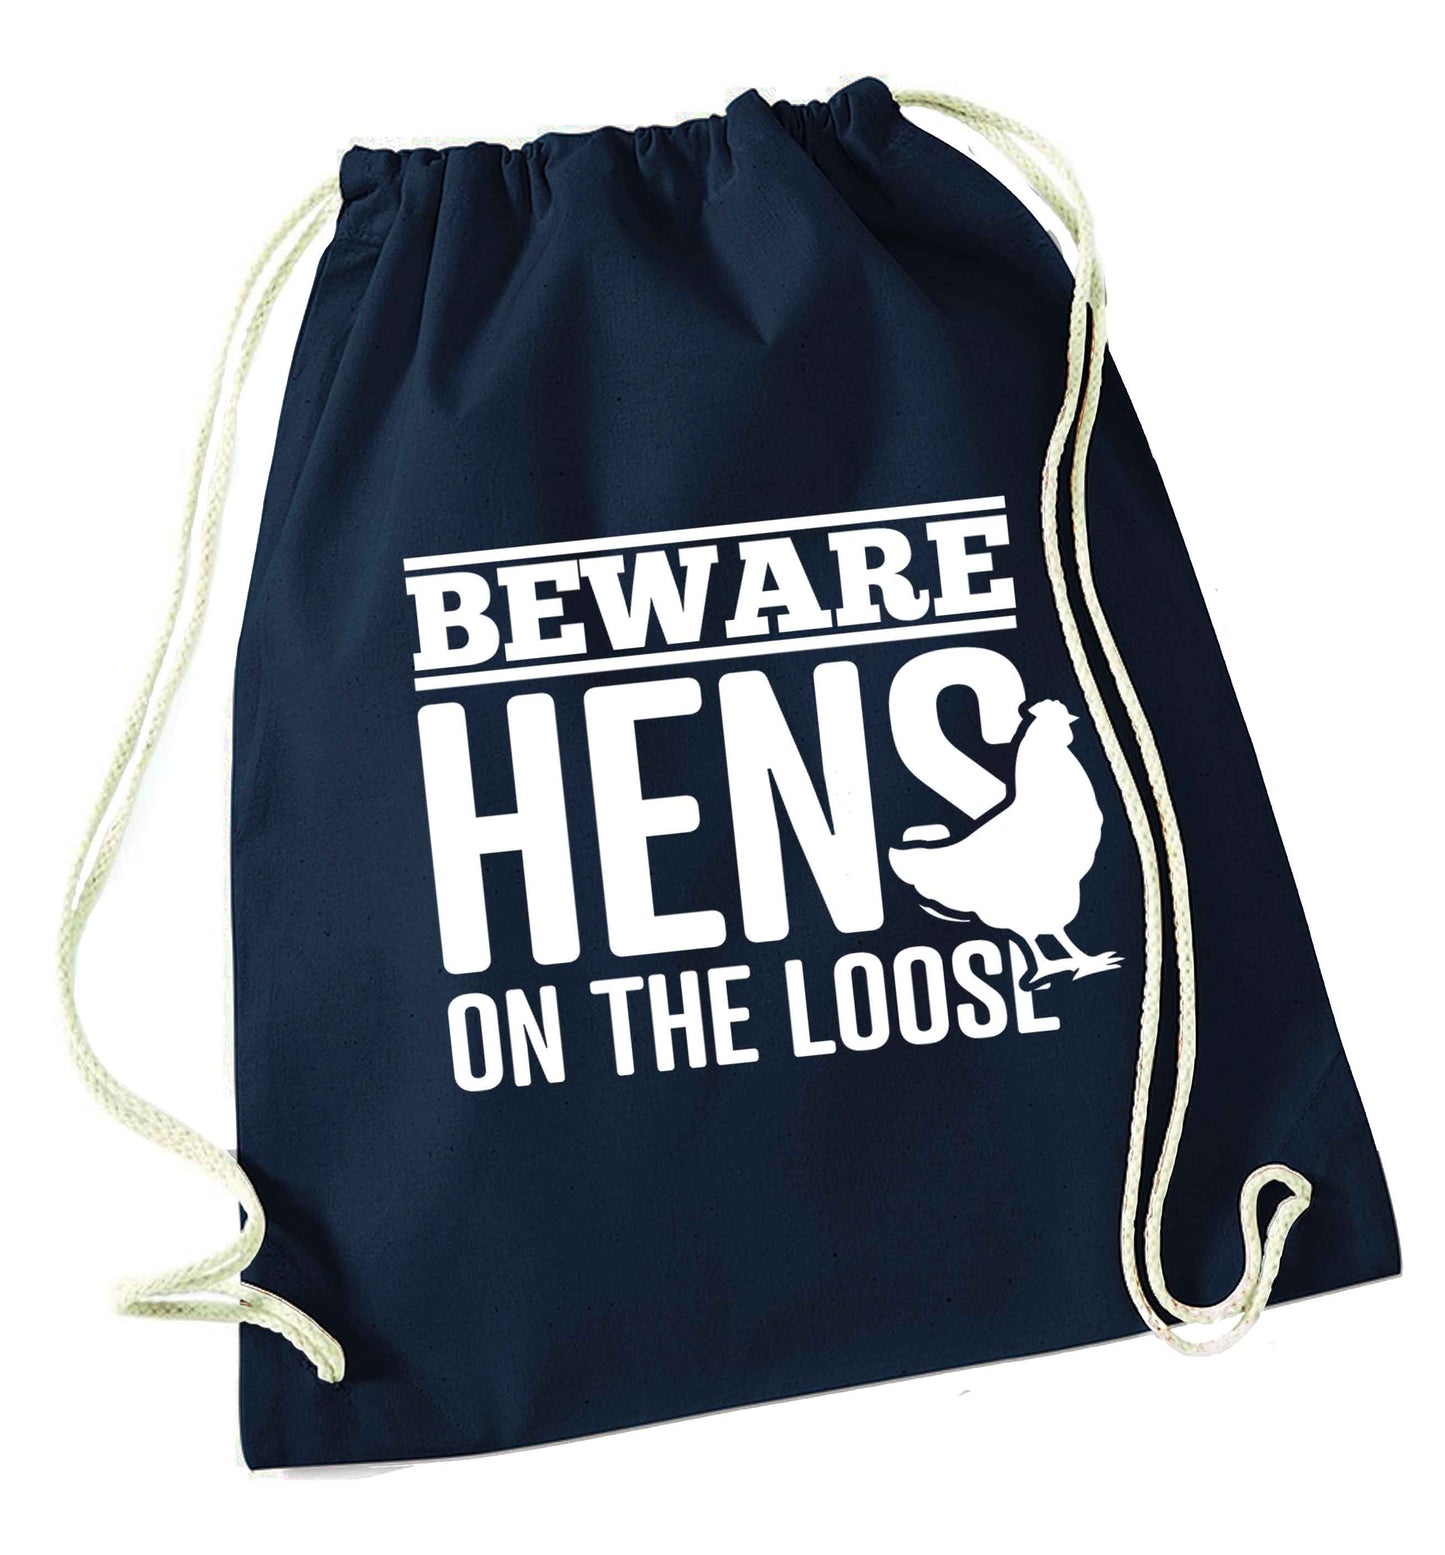 Beware hens on the loose navy drawstring bag